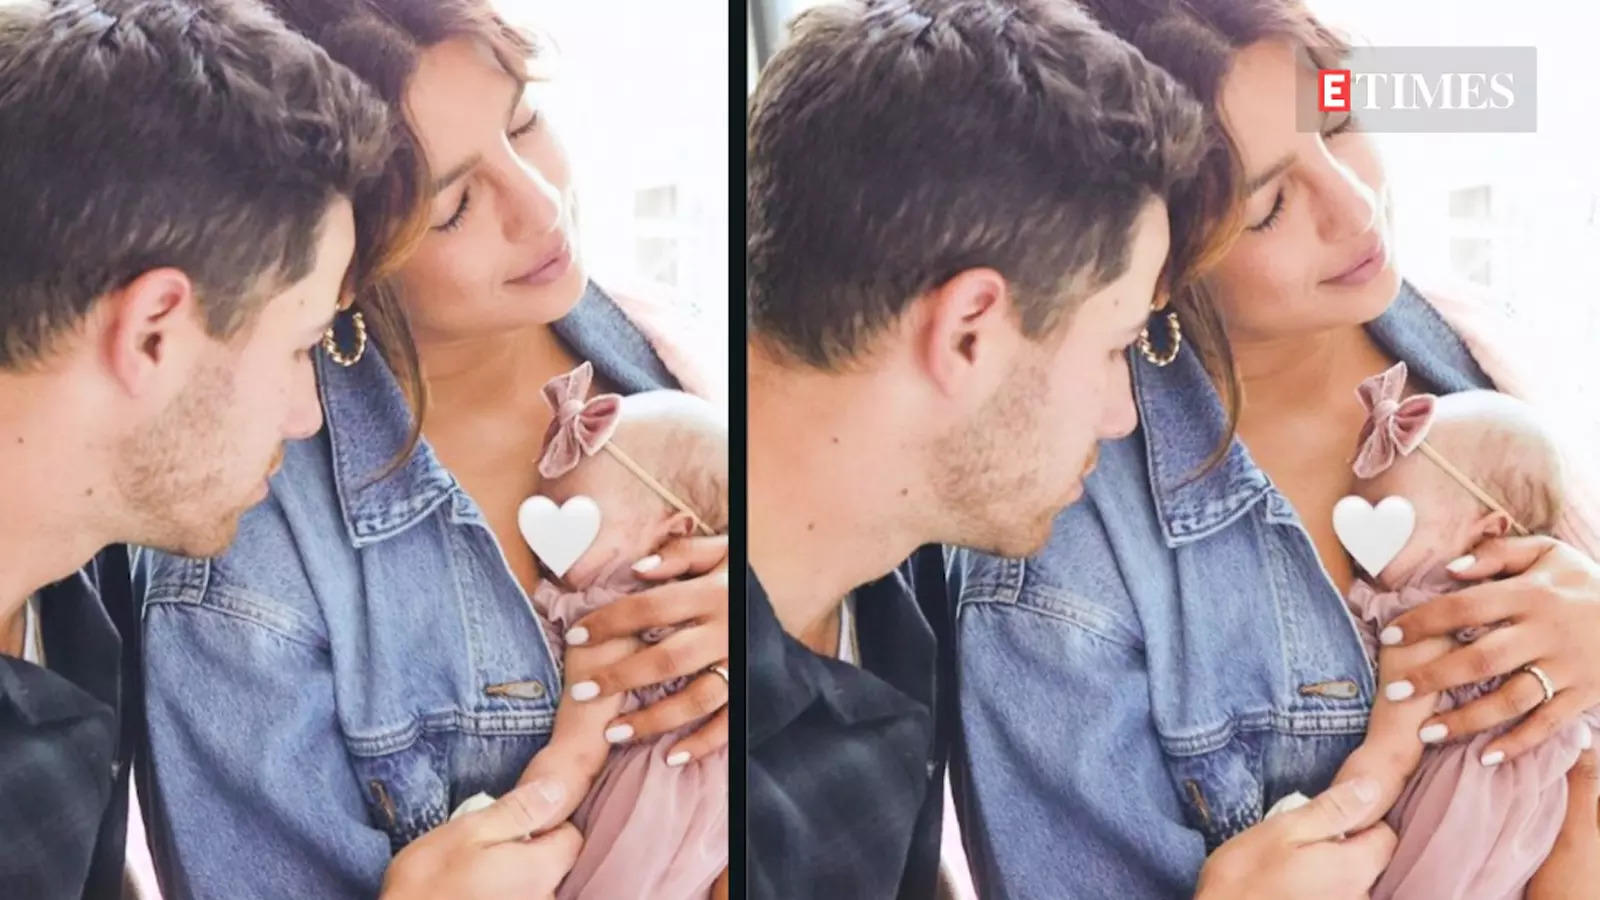 Nick Jonas and Priyanka Chopra bring baby home after 100 days in intensive care